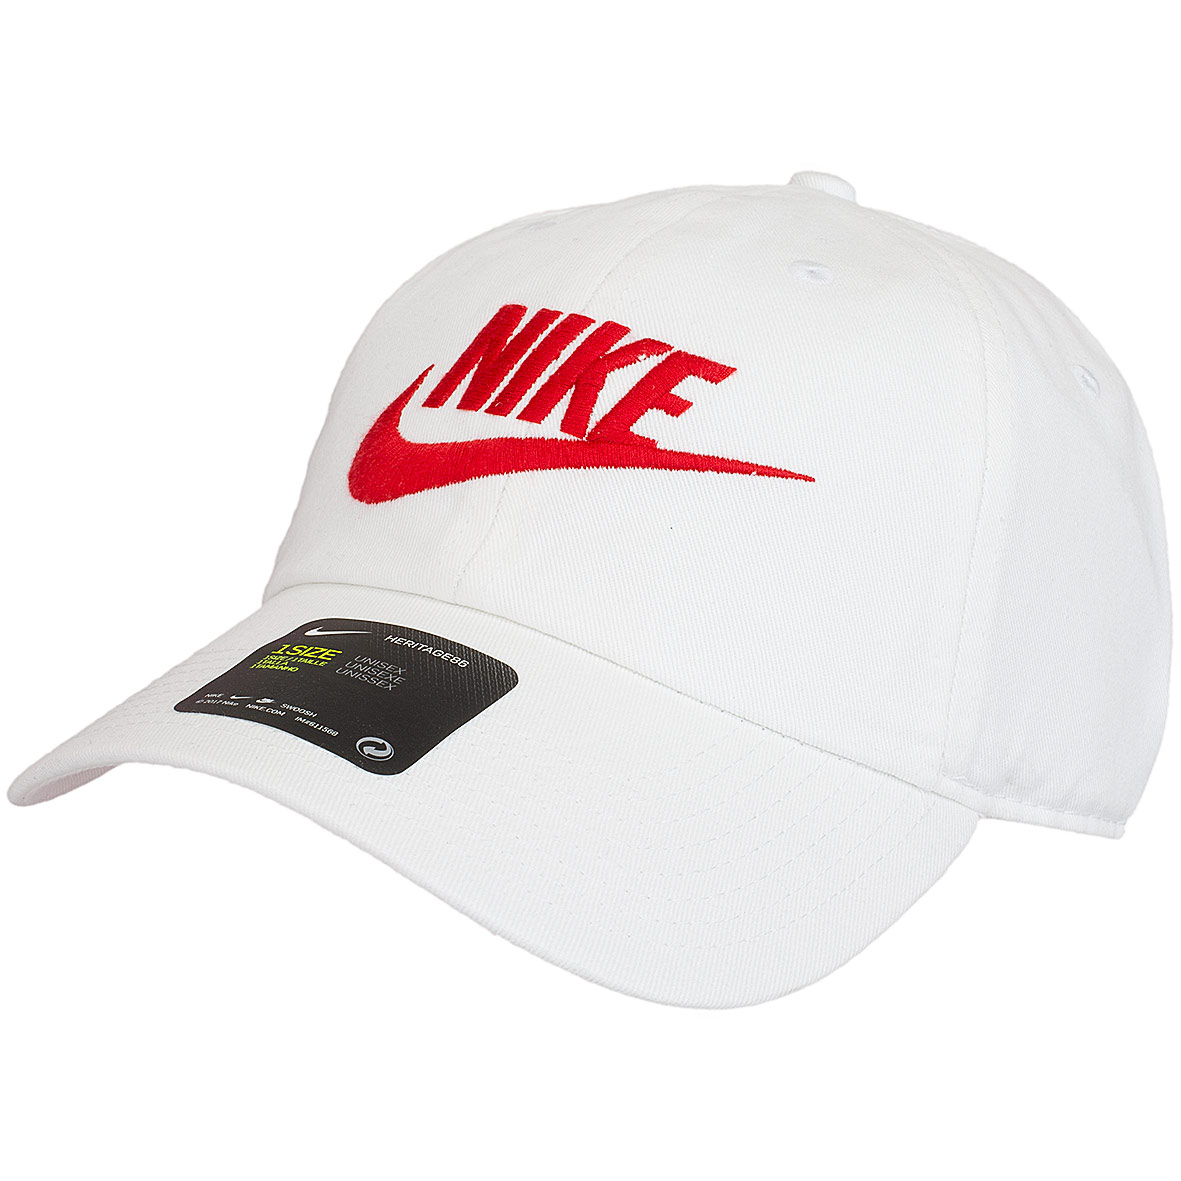 ☆ Nike Snapback Cap Futura H86 weiß/rot - hier bestellen!